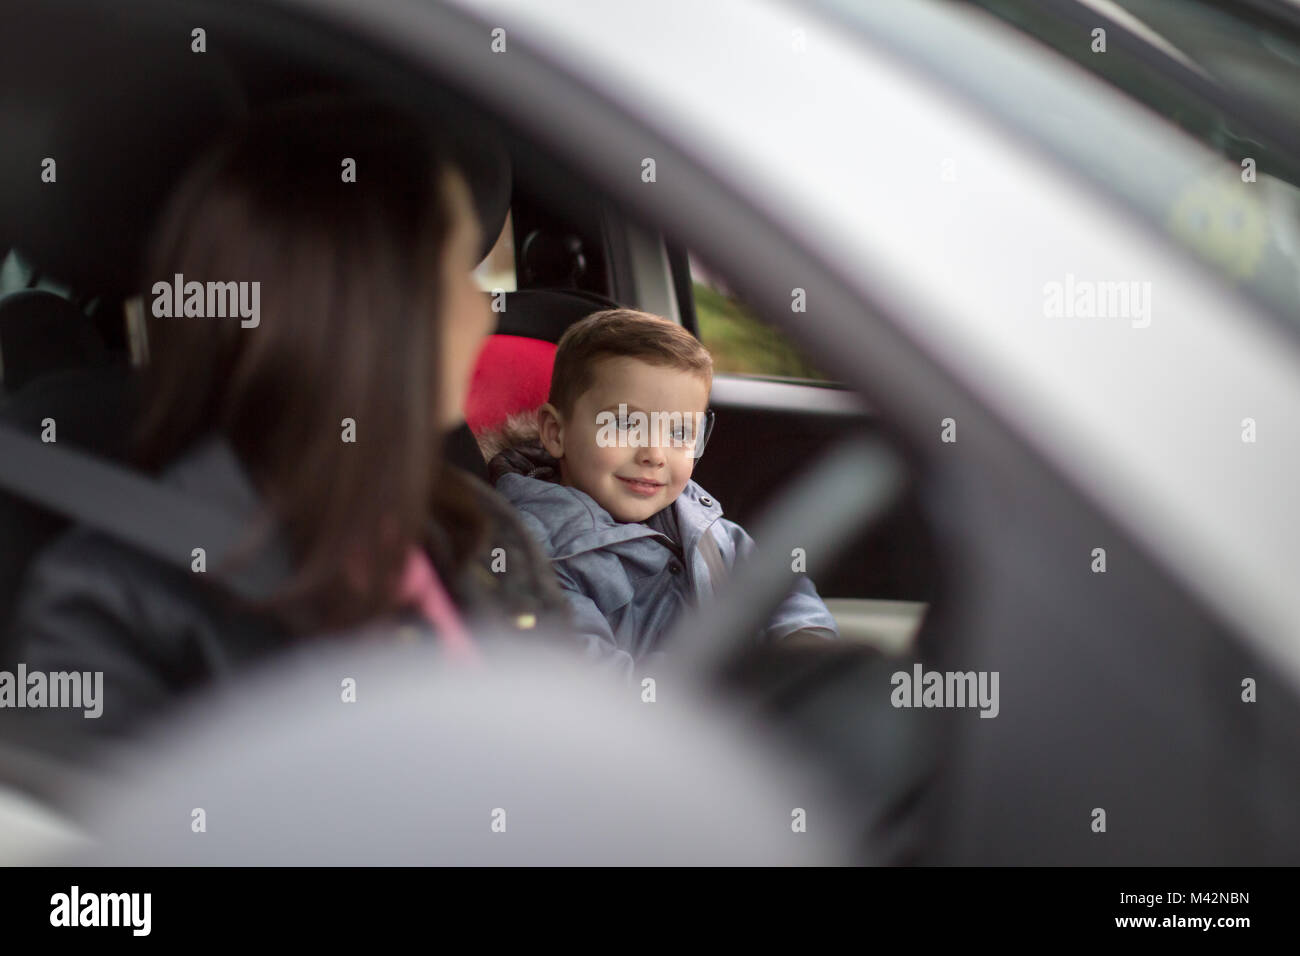 Boy smiling on car road trip Stock Photo